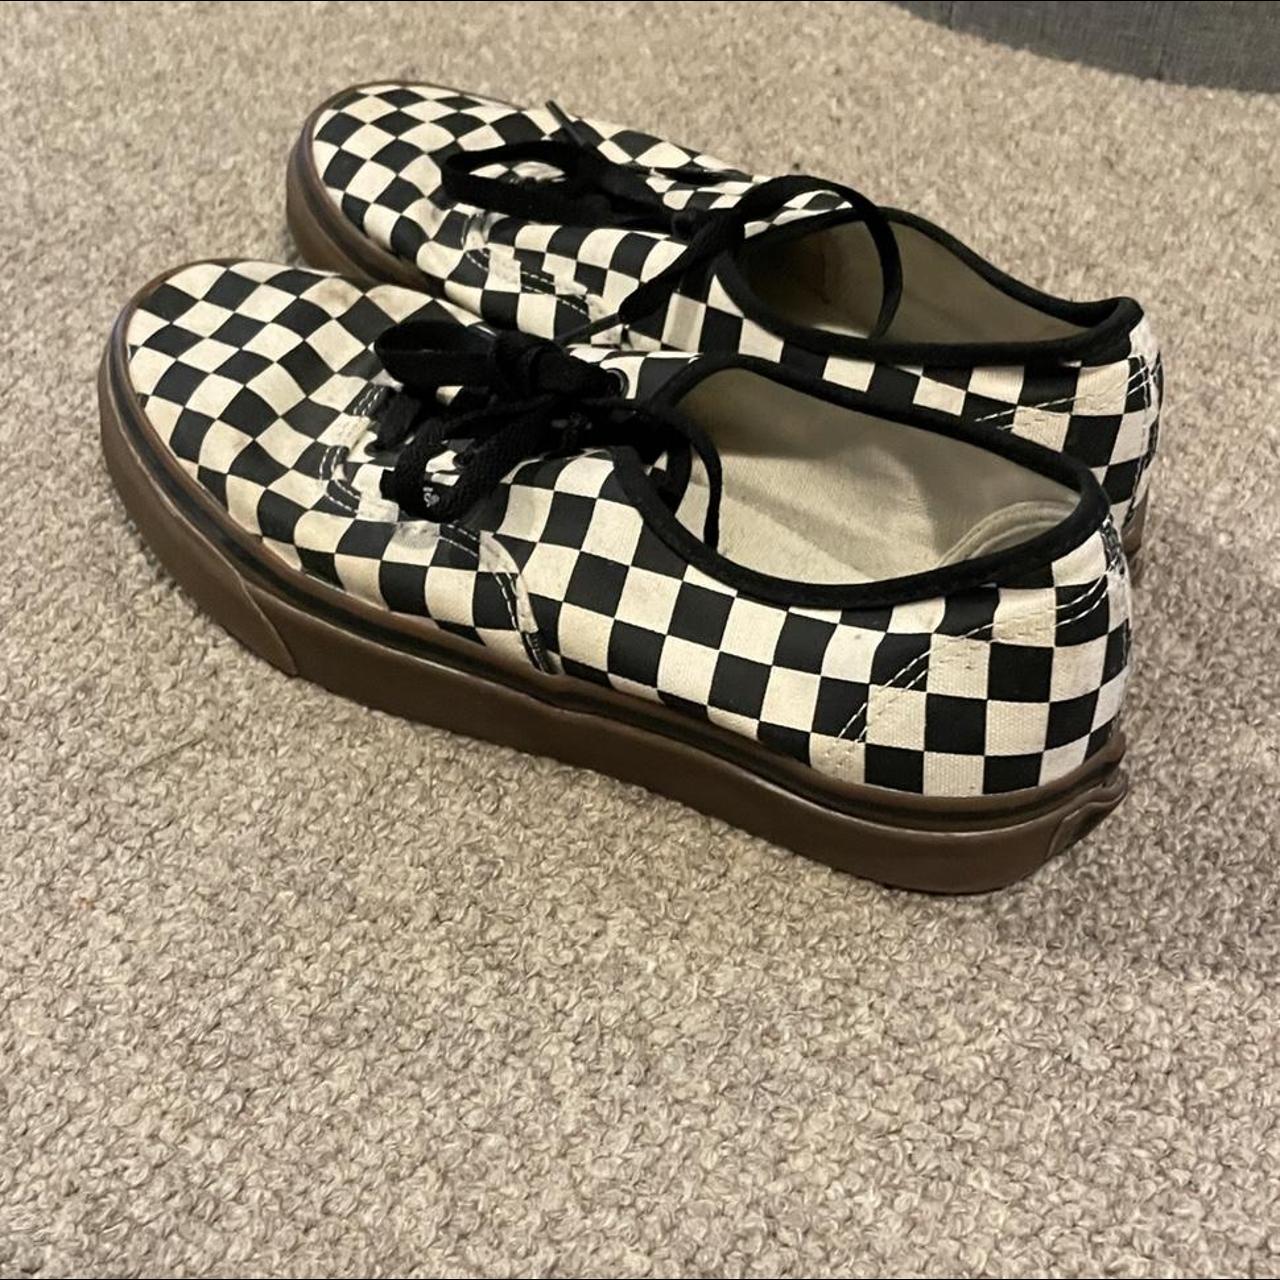 Vans checkerboard/gum sole size uk8/us 9 - Depop